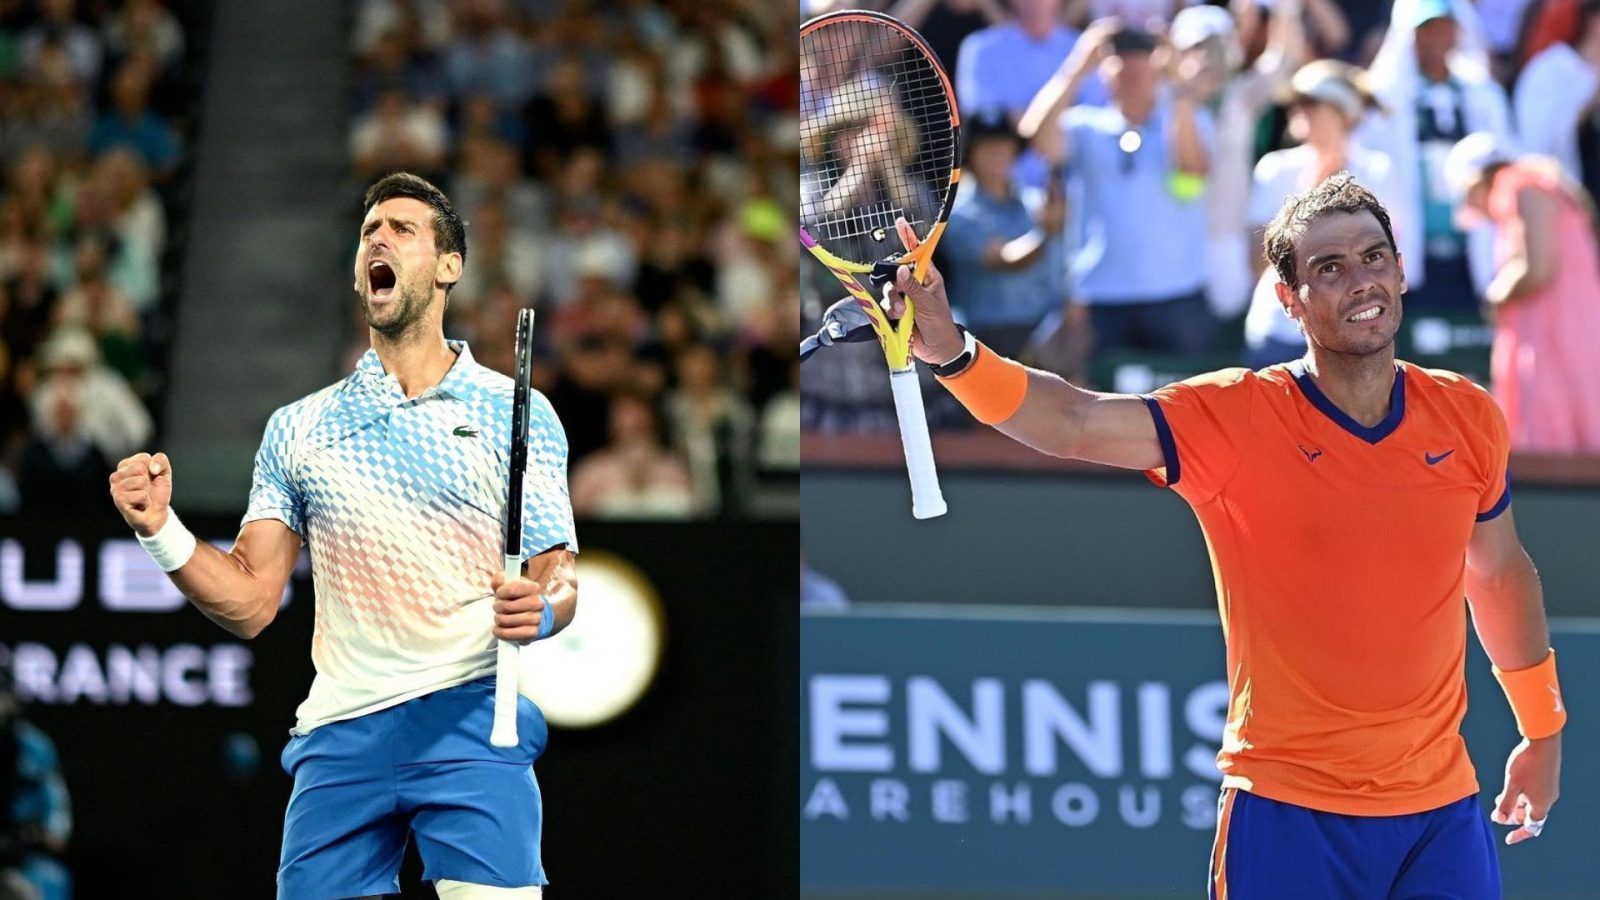 Rafael Nadal vs Novak Djokovic: Who is the better player?